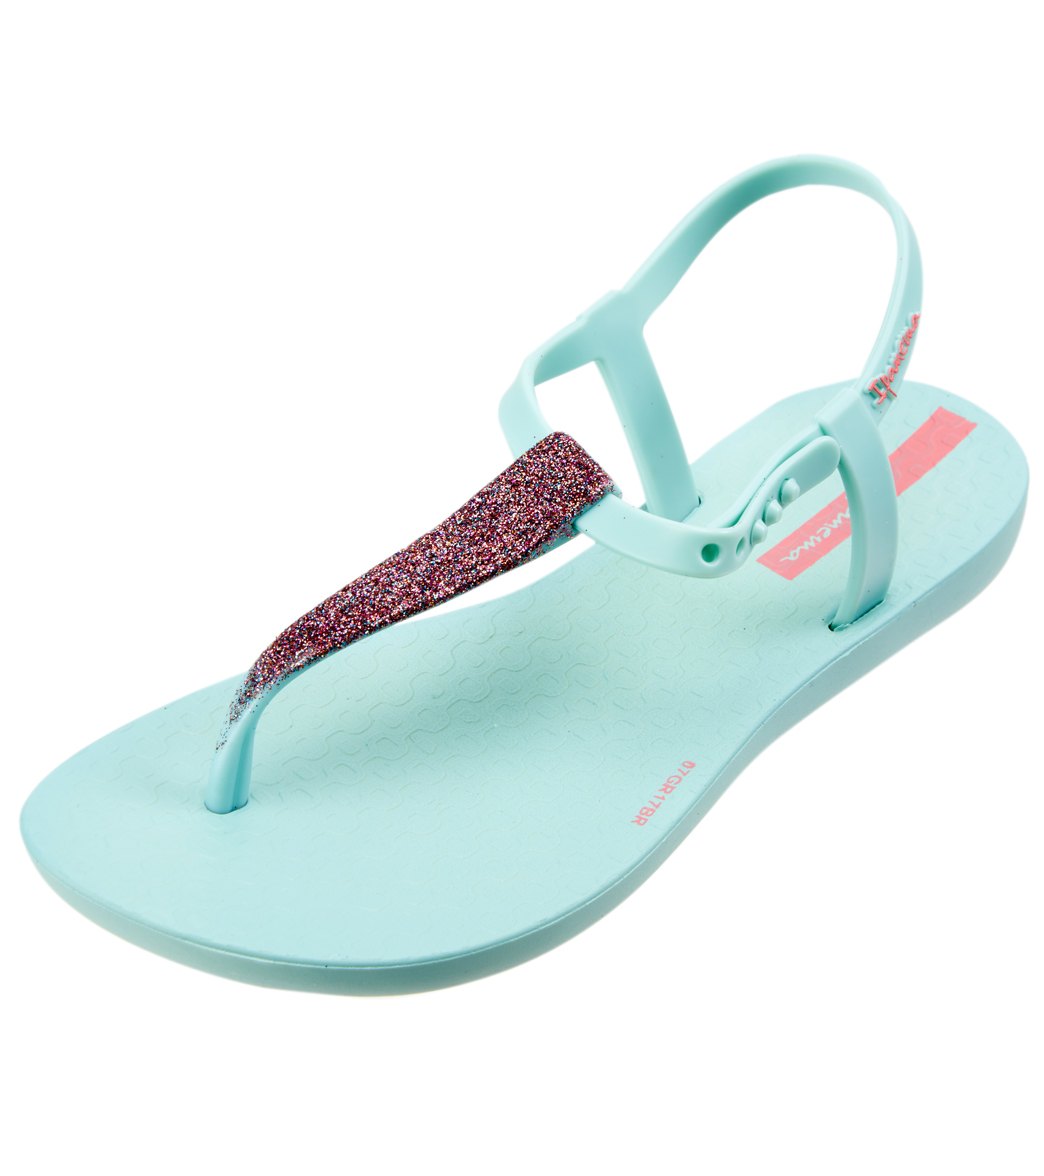 Ipanema Girls' Shimmer Sandals Toddler/Little/Big Kid - Green/Green 11/12 Kid 100% Rubber - Swimoutlet.com